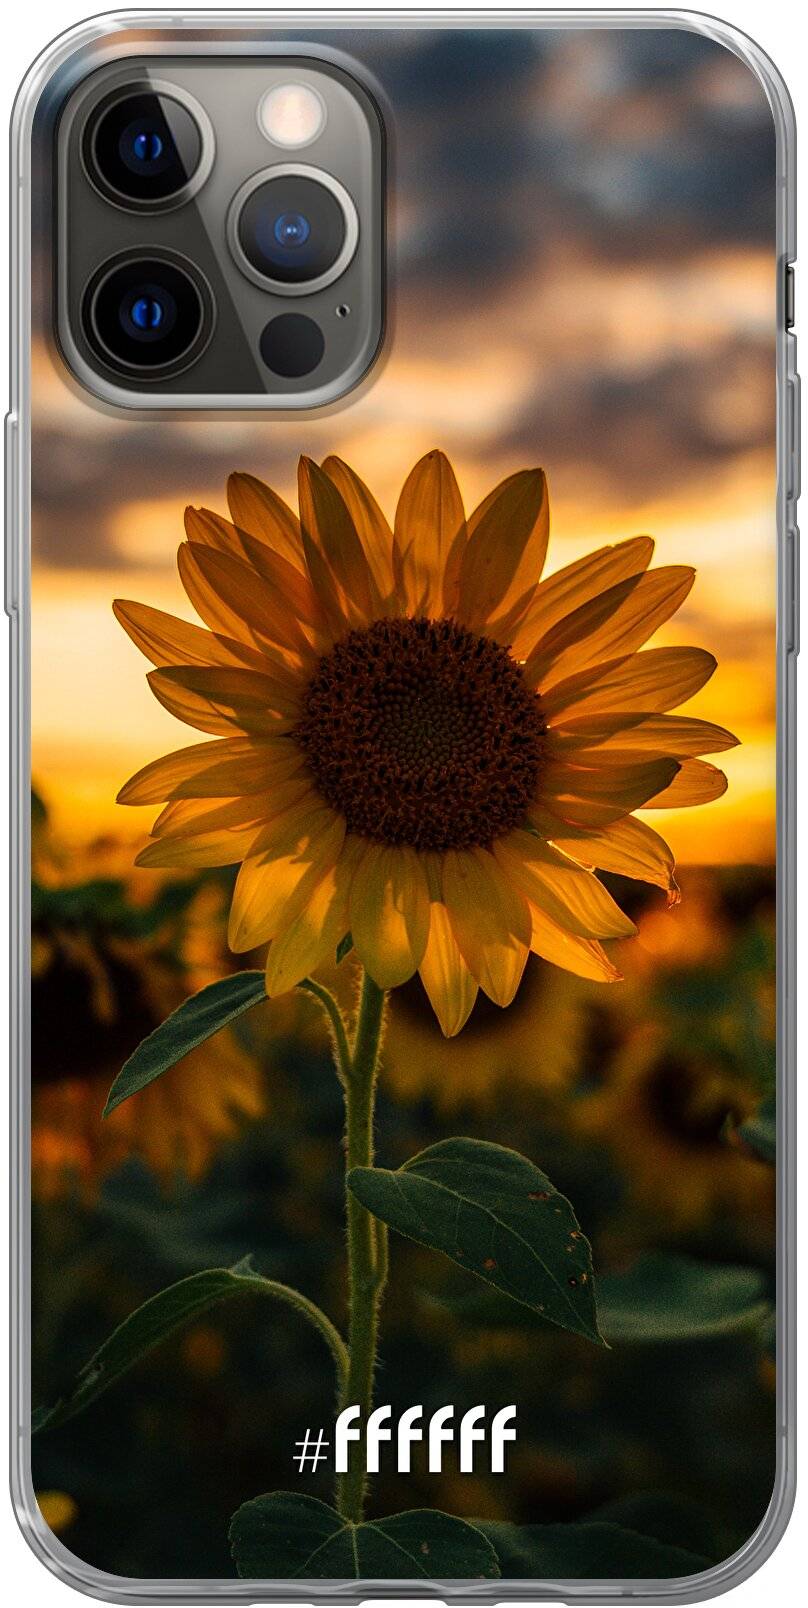 Sunset Sunflower iPhone 12 Pro